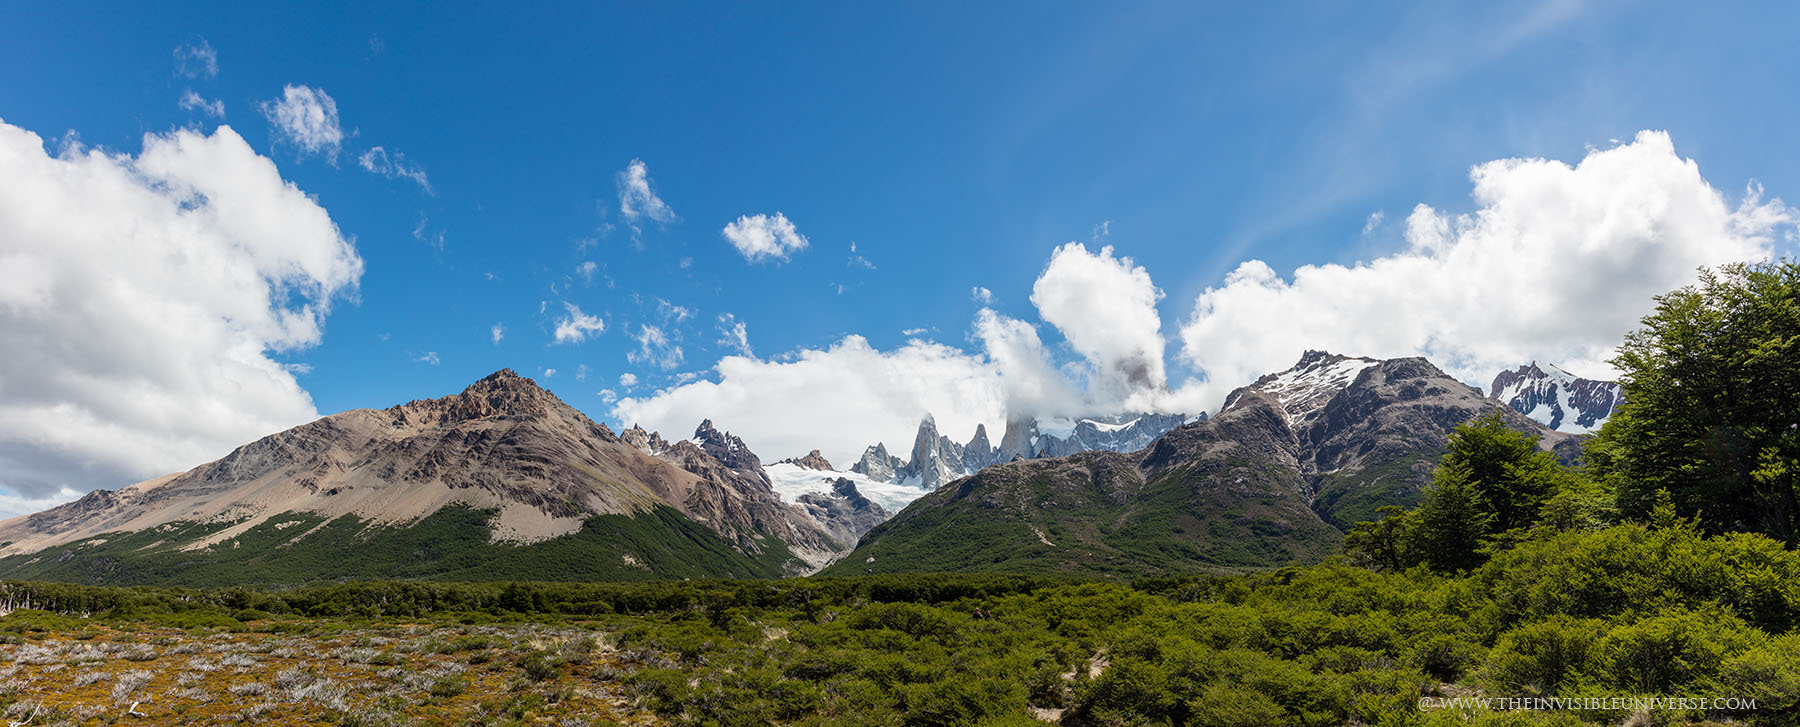 Chile_Patagonia_031.jpg